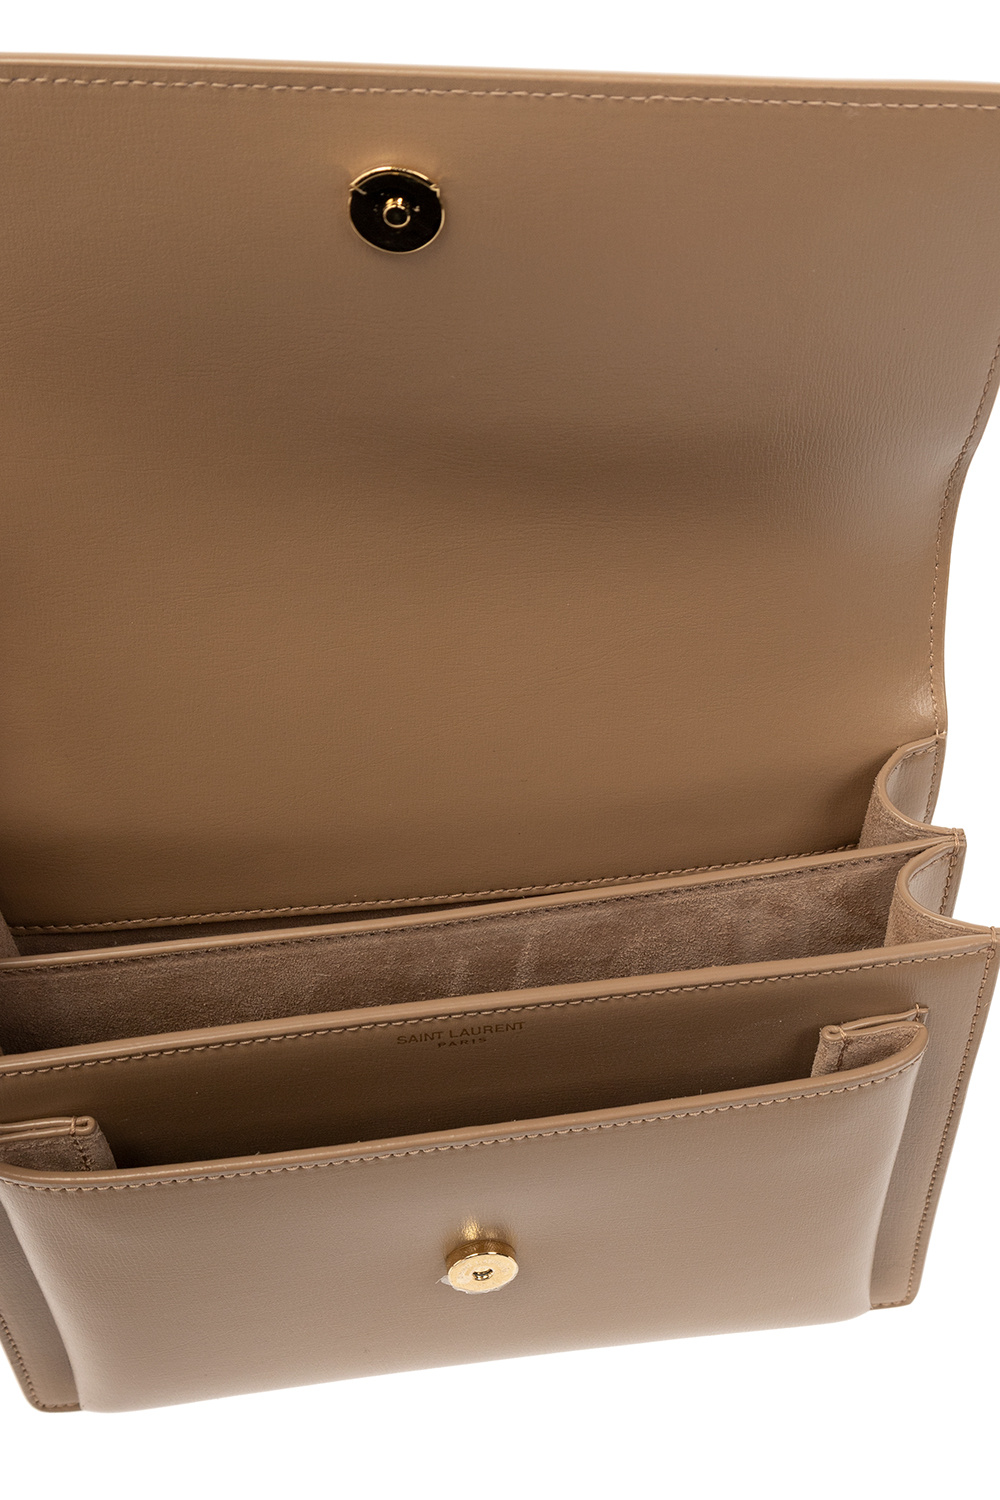 Brown 'Envelope Medium' shoulder bag Saint Laurent - Vitkac Germany